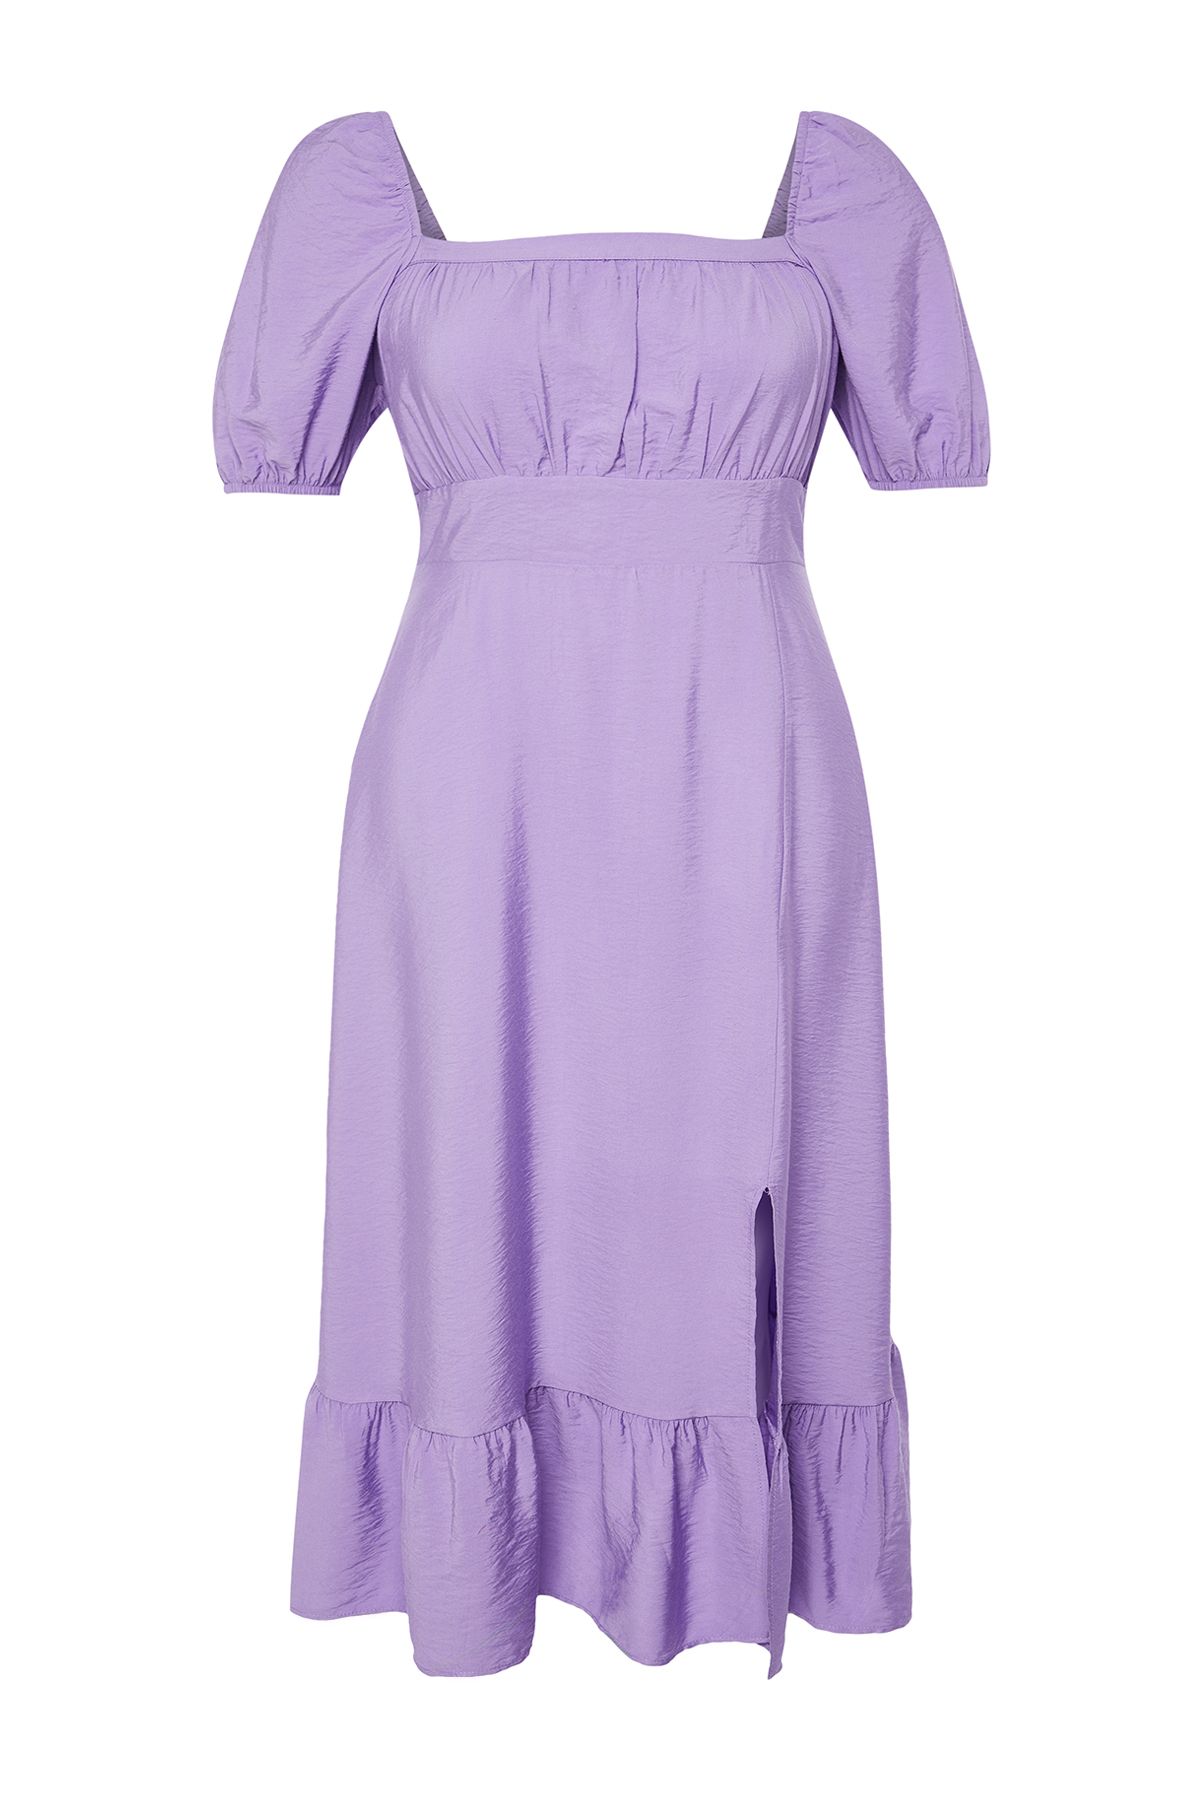 Trendyol Curve Lilac Square Neckline Ruffle Skirt Woven Dress